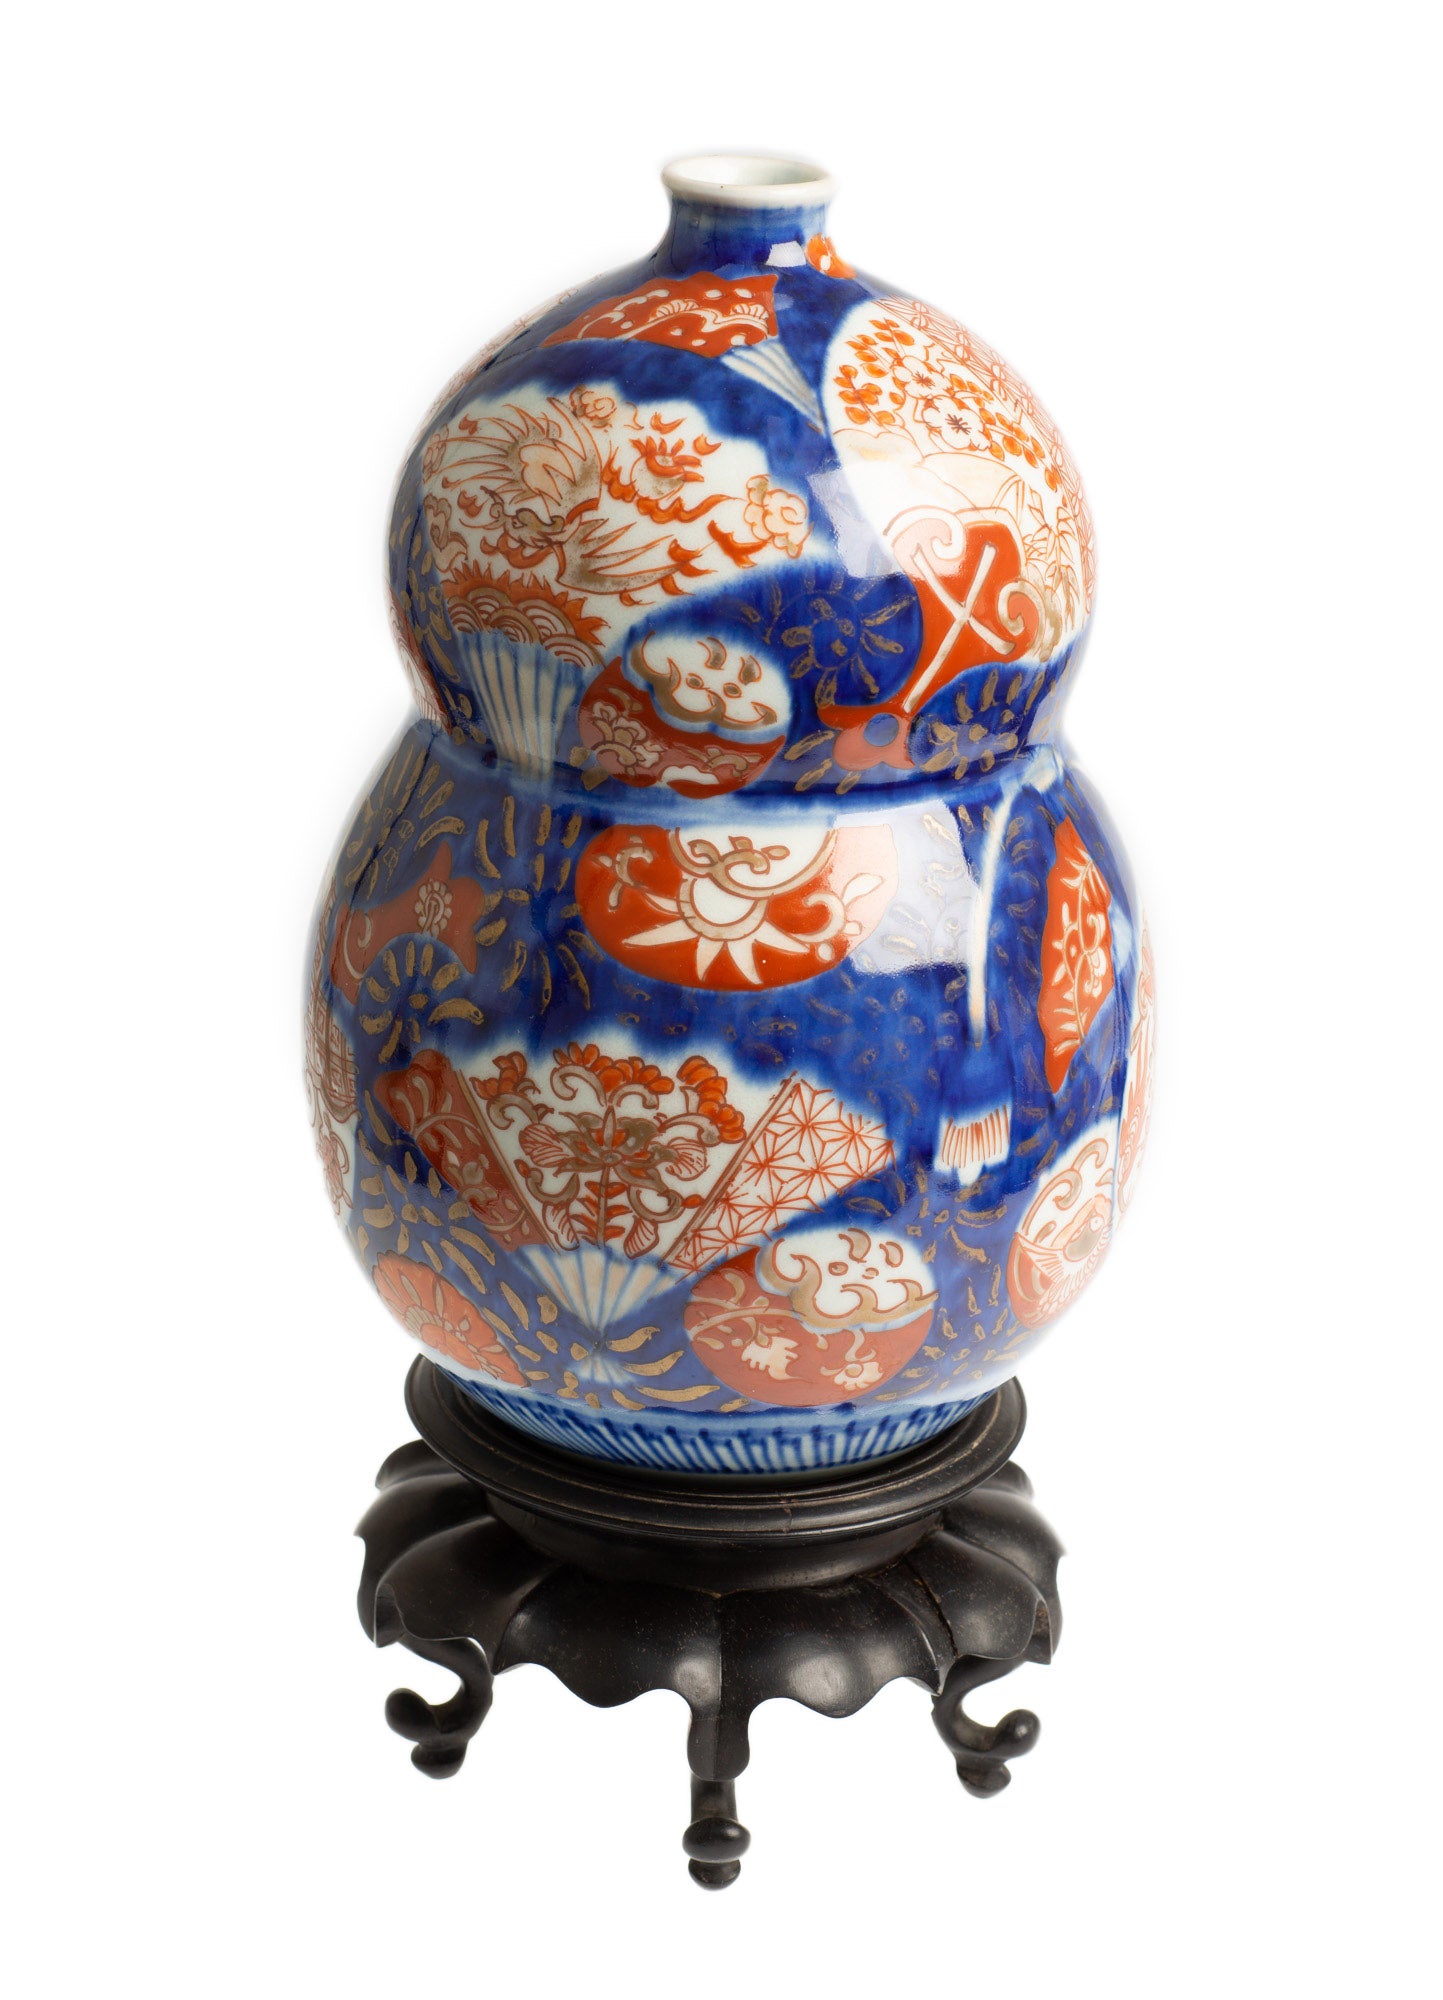 Antique Japanese Imari Ware Vase, Double Gourd Form, Fan & Roundel Design (Code 2684)